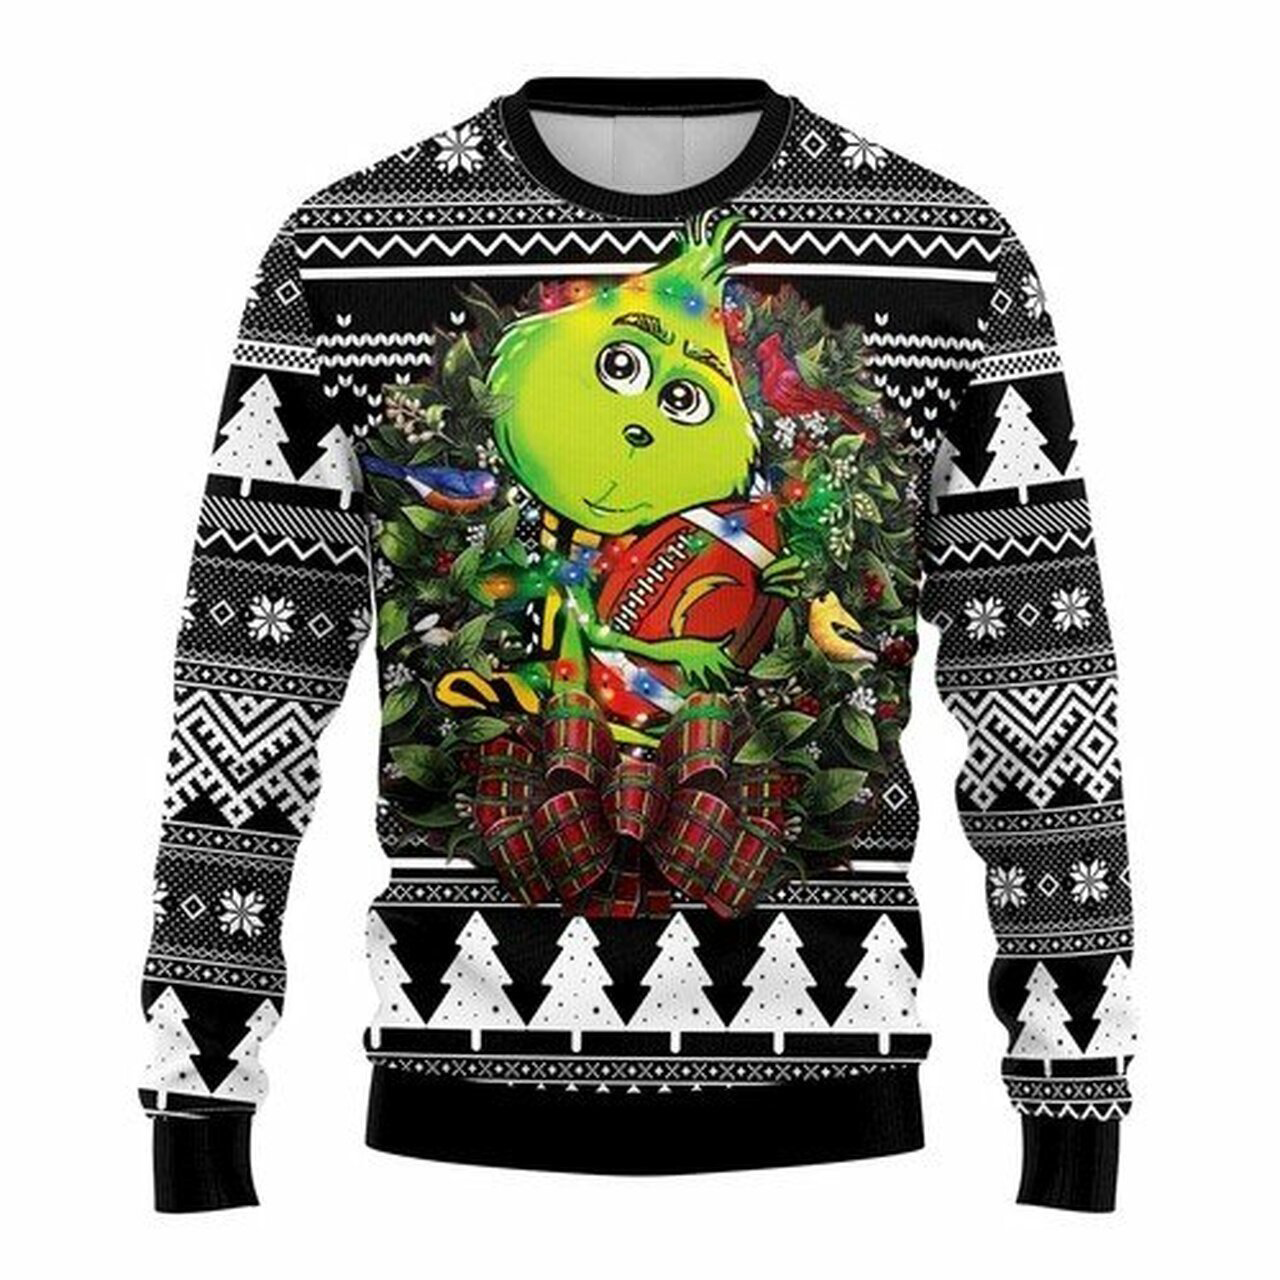 [ HOT ] NFL San Diego Chargers Grinch hug ugly christmas sweater – Saleoff 040122